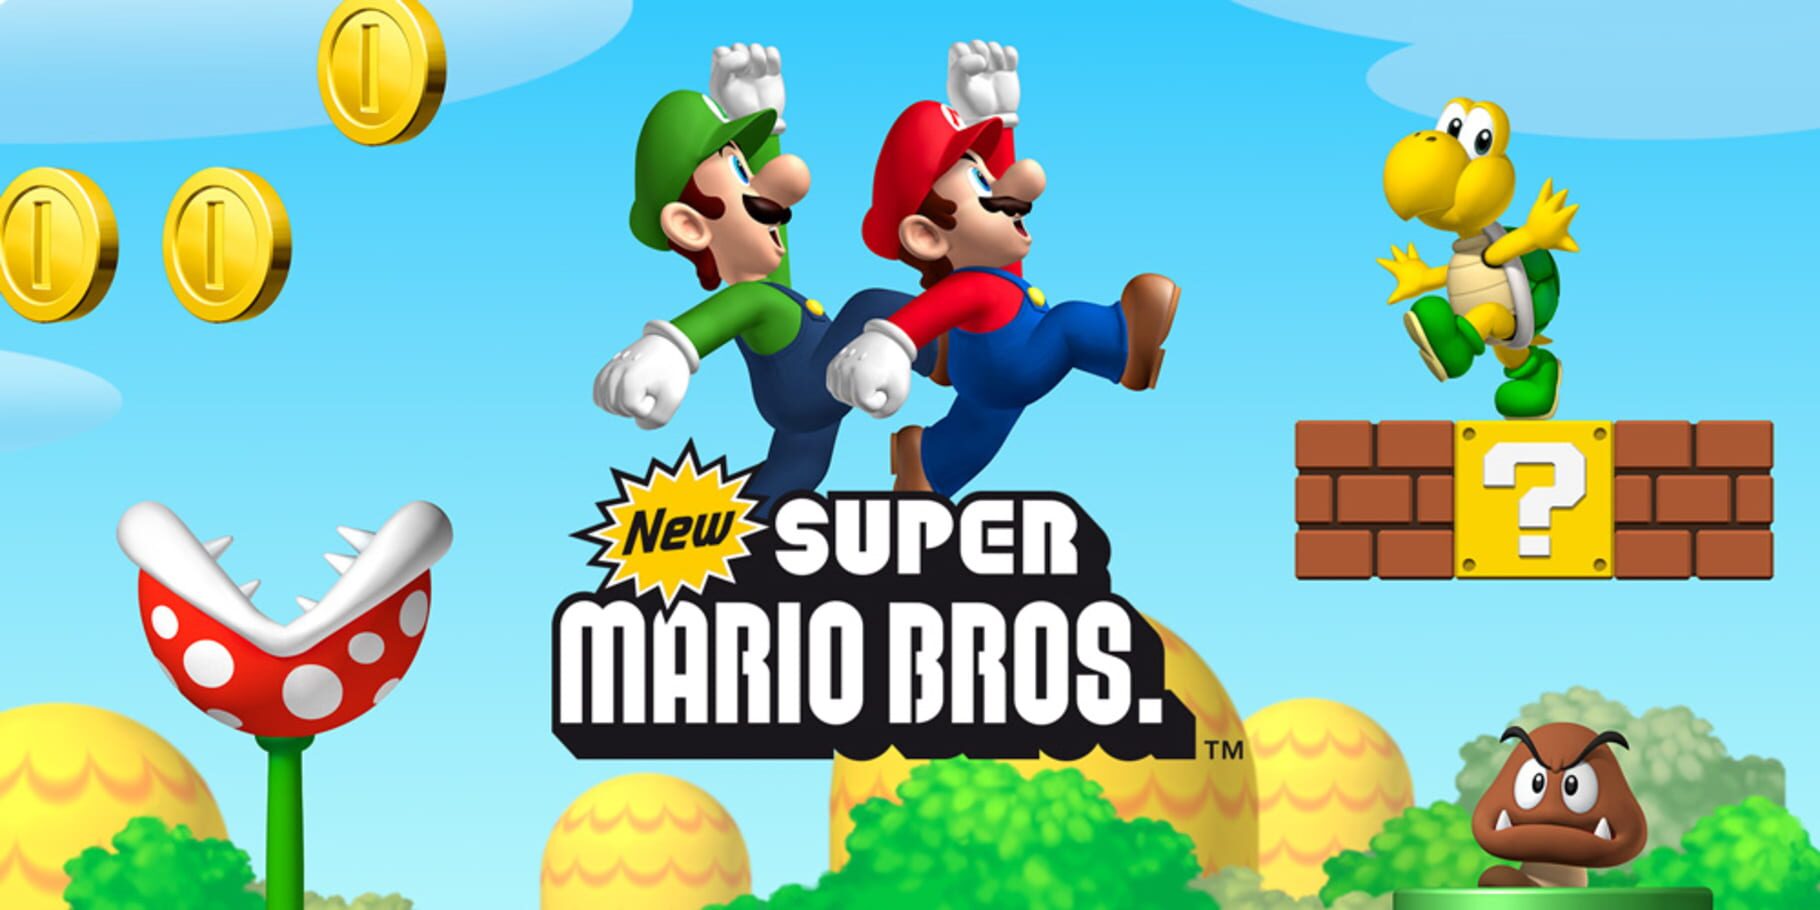 Arte - New Super Mario Bros.